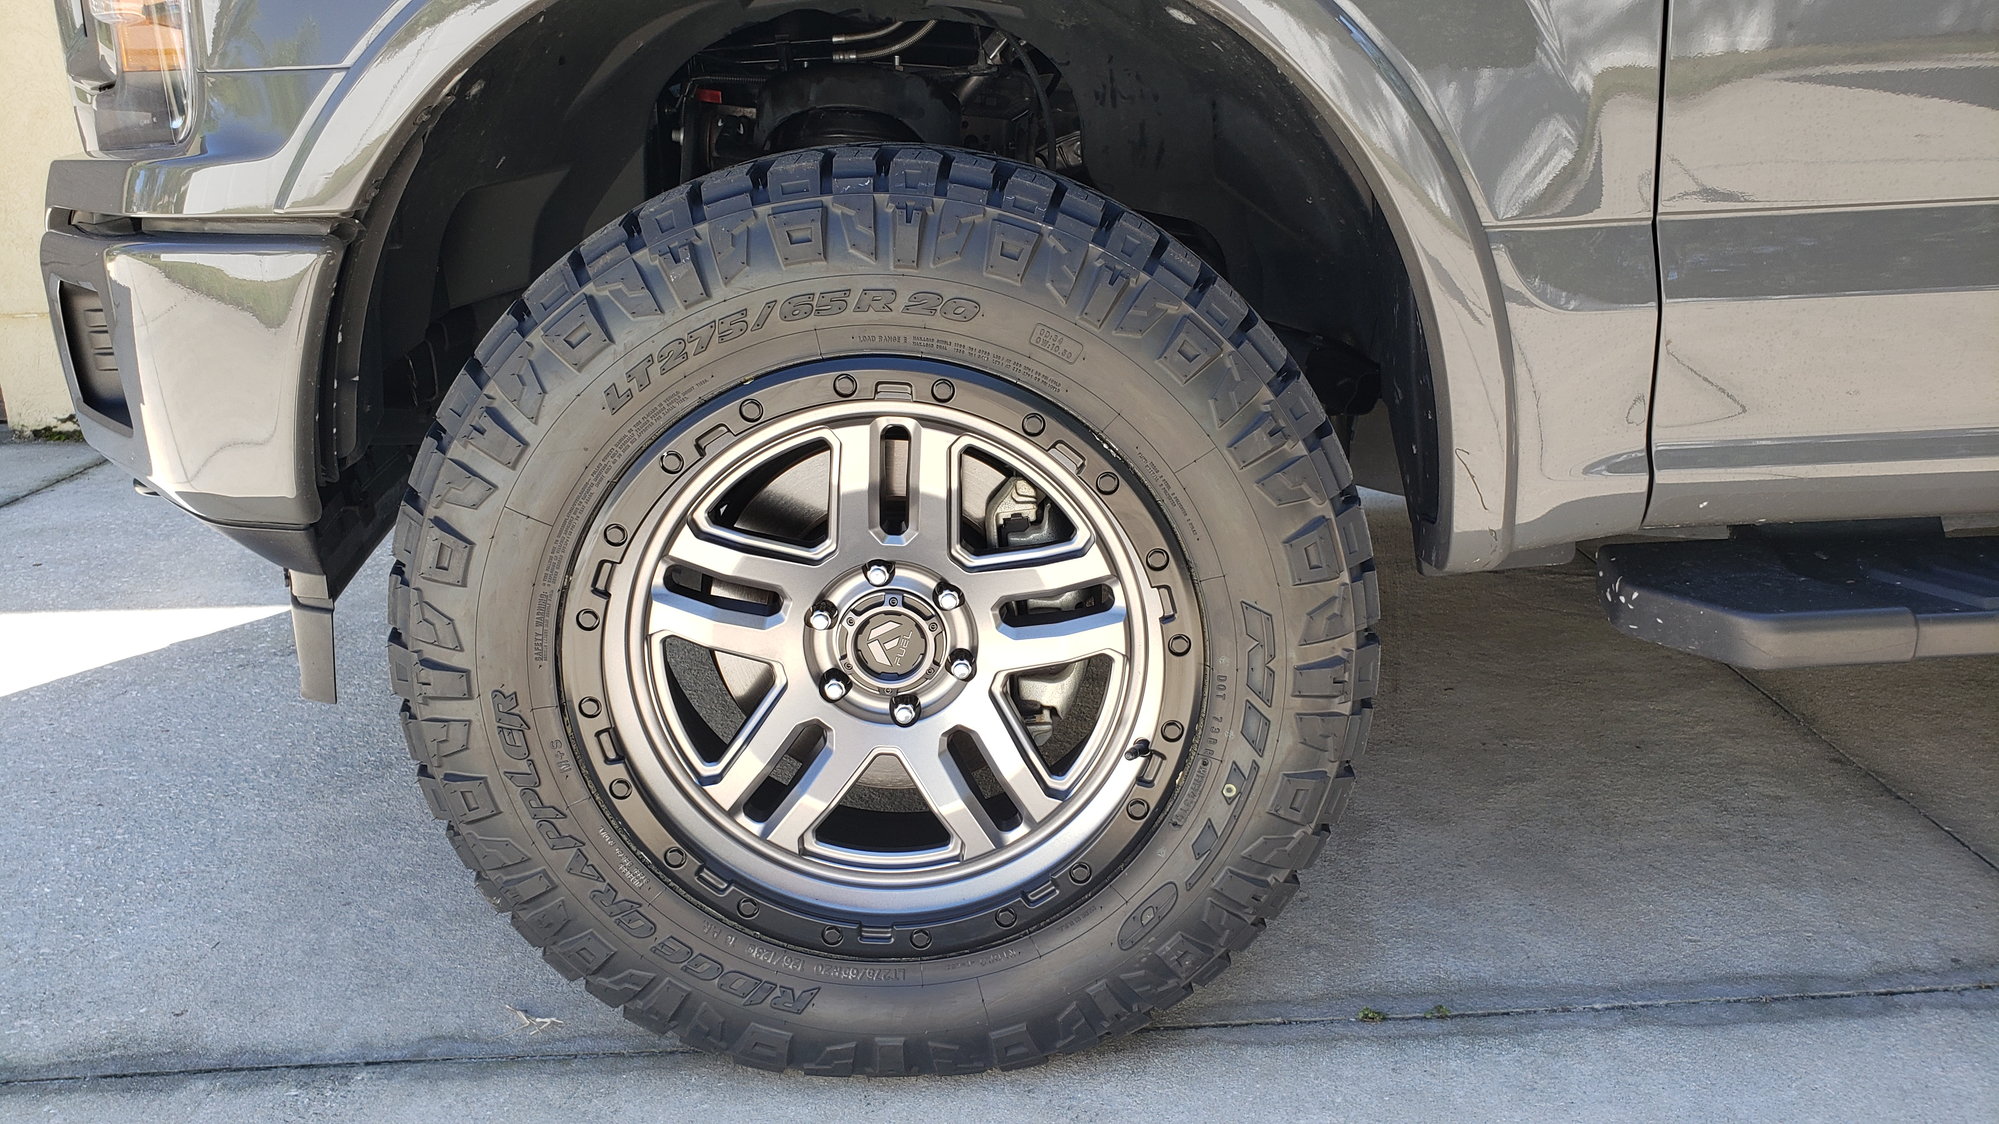 28 silverback tires